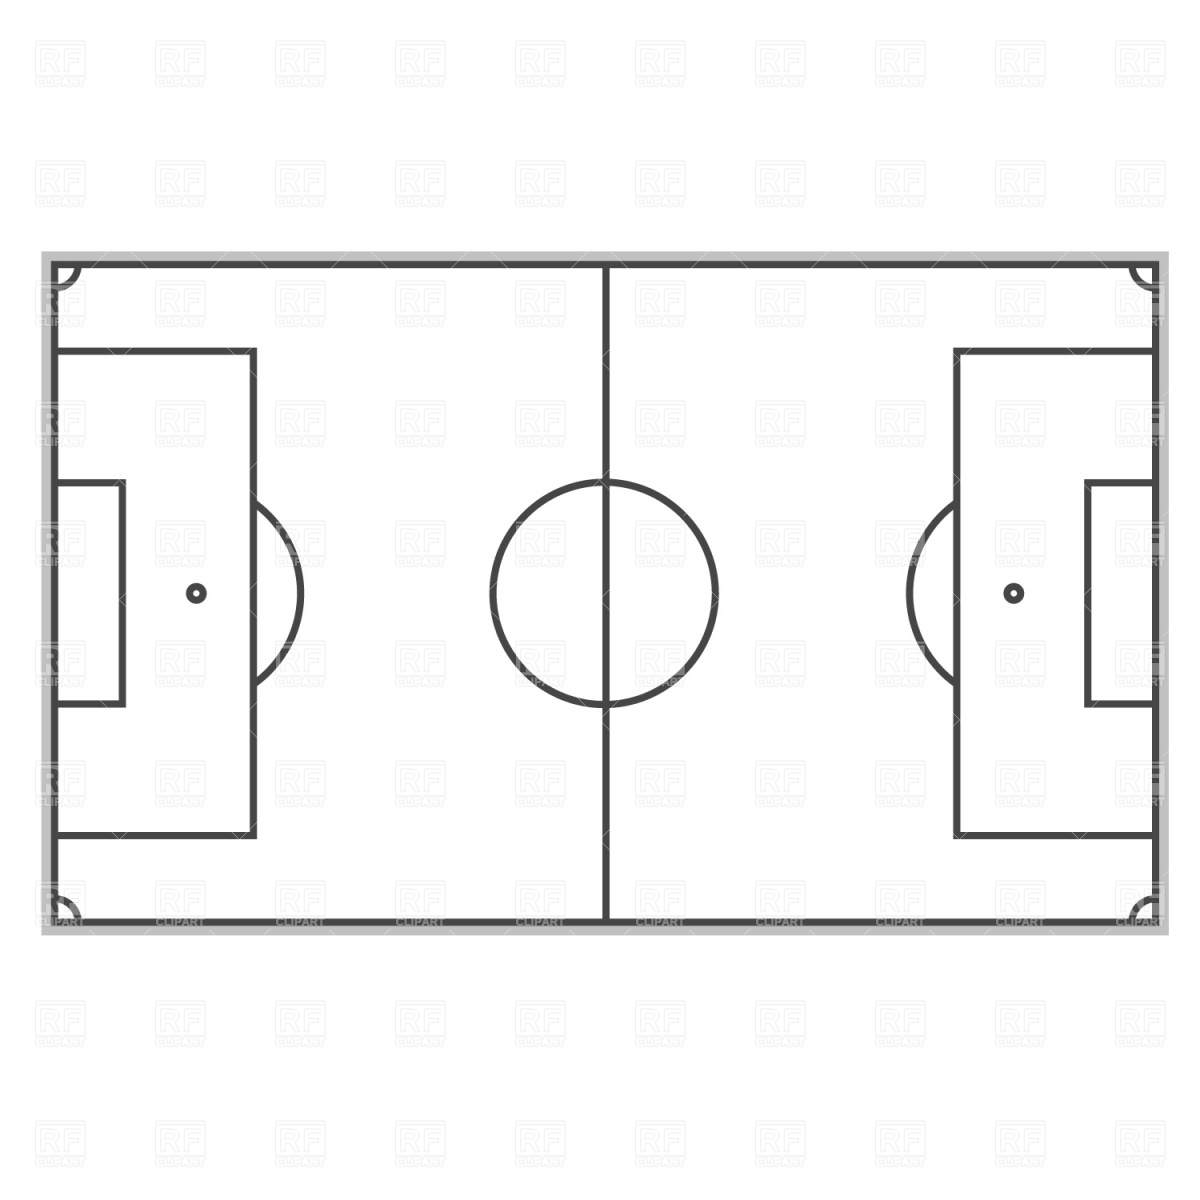 Soccer Field Diagram Free Soccer Field Layout Download Free Clip Art Free Clip Art On